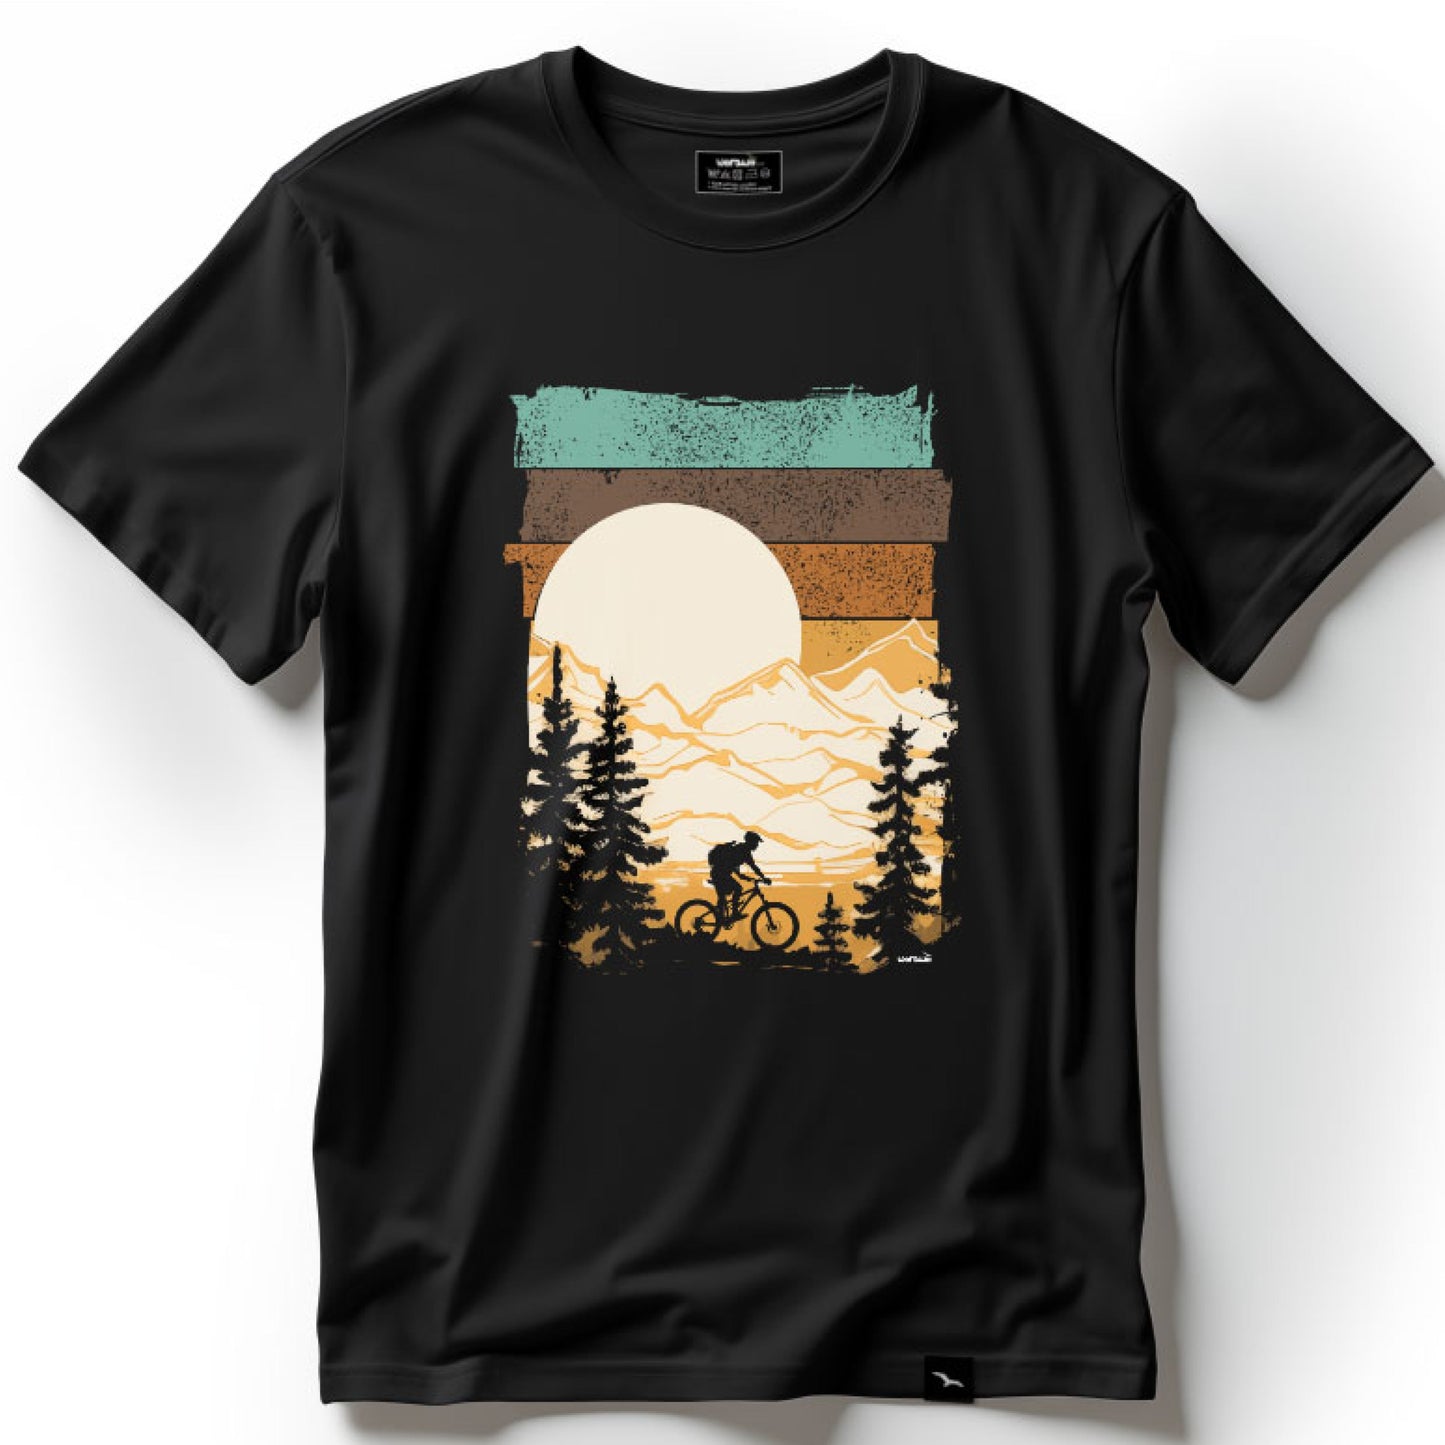 T-Shirt "Mountainbike"